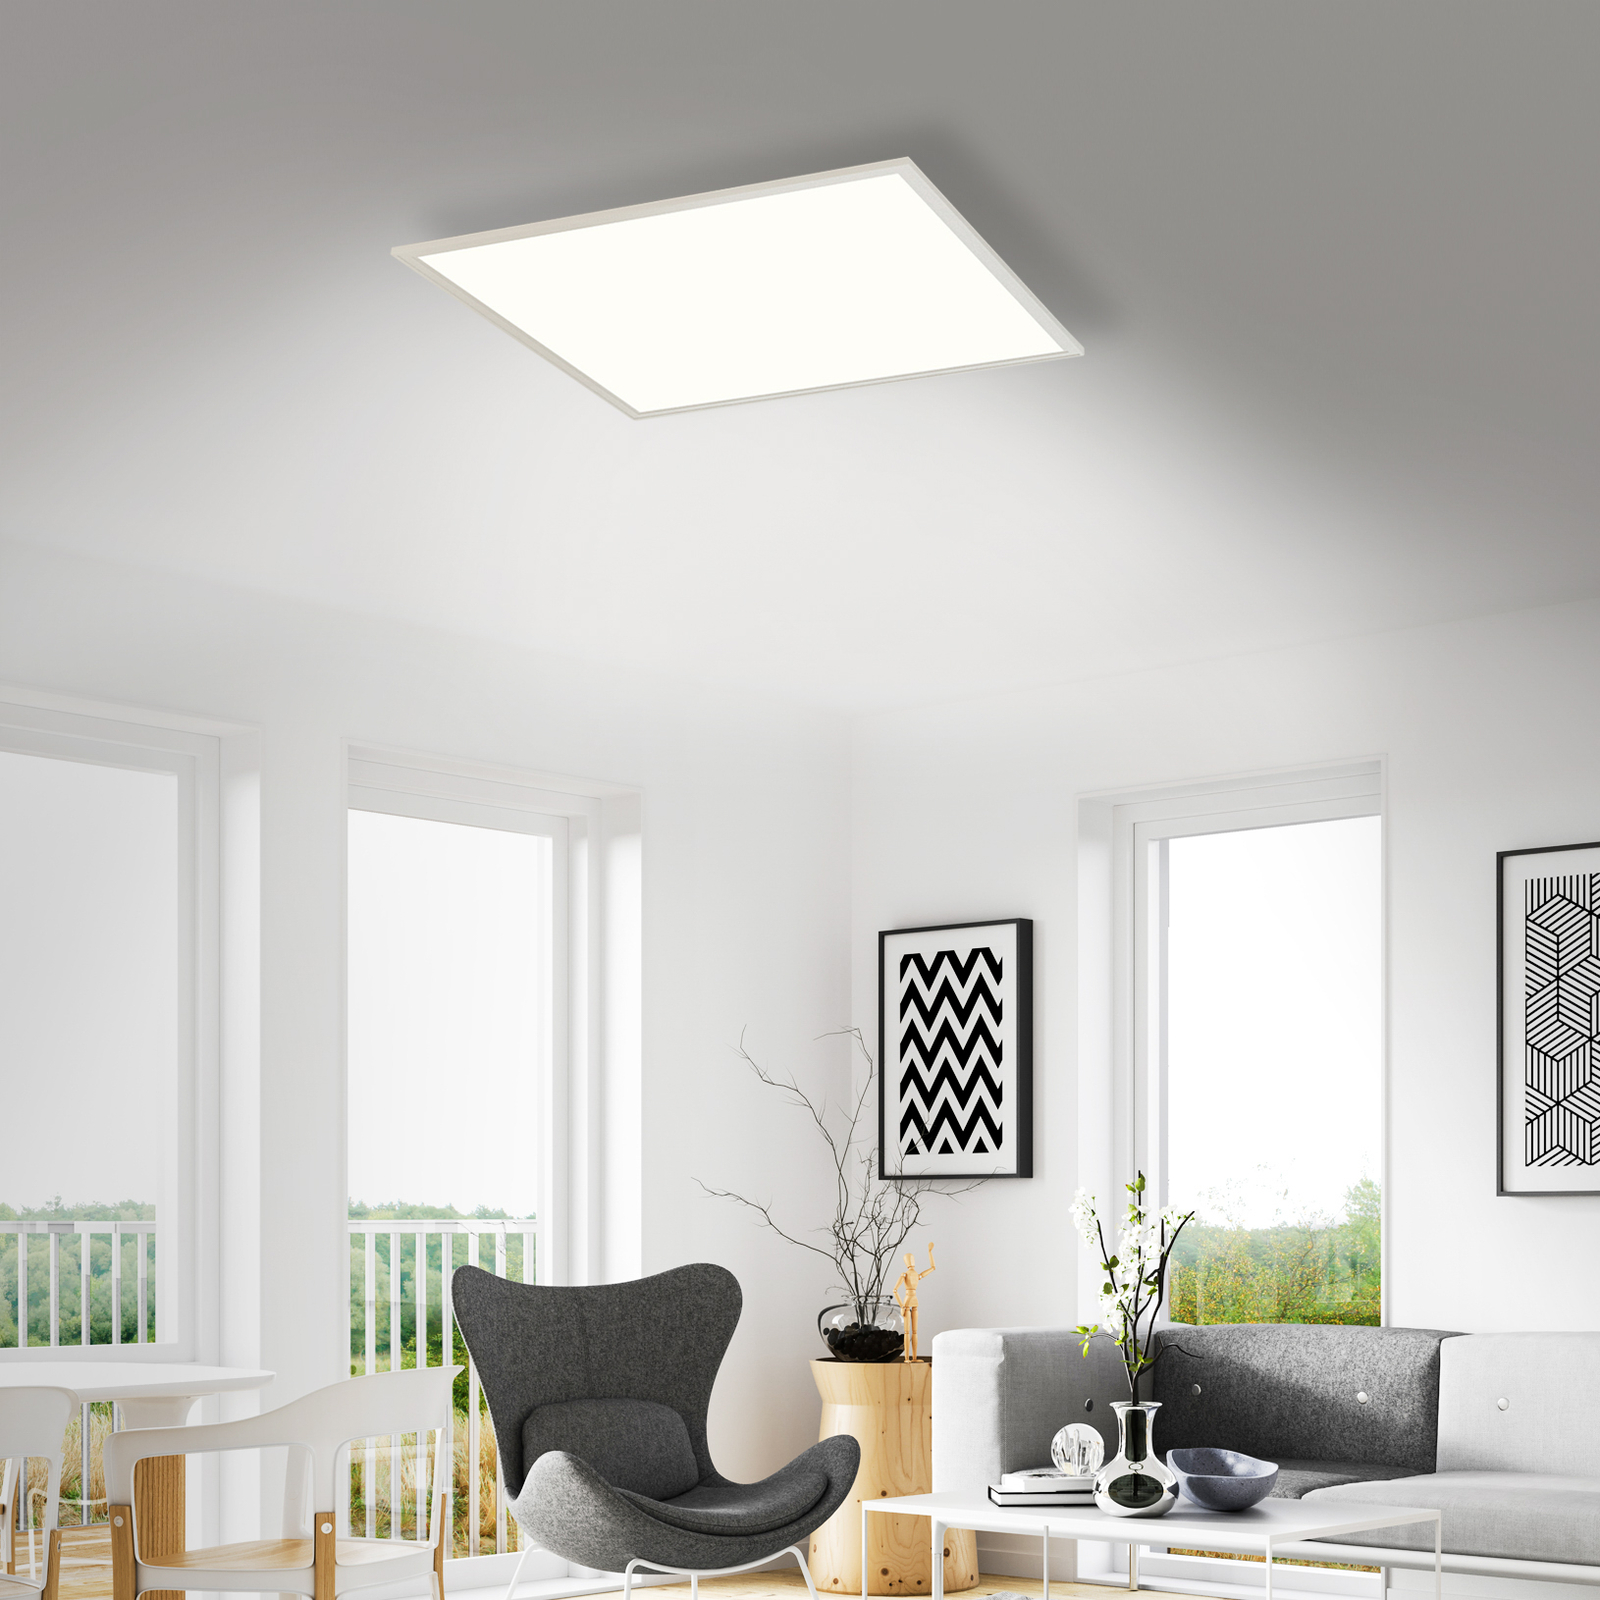 LED panel Simple fehér, ultralapos, 59,5x59,5 cm